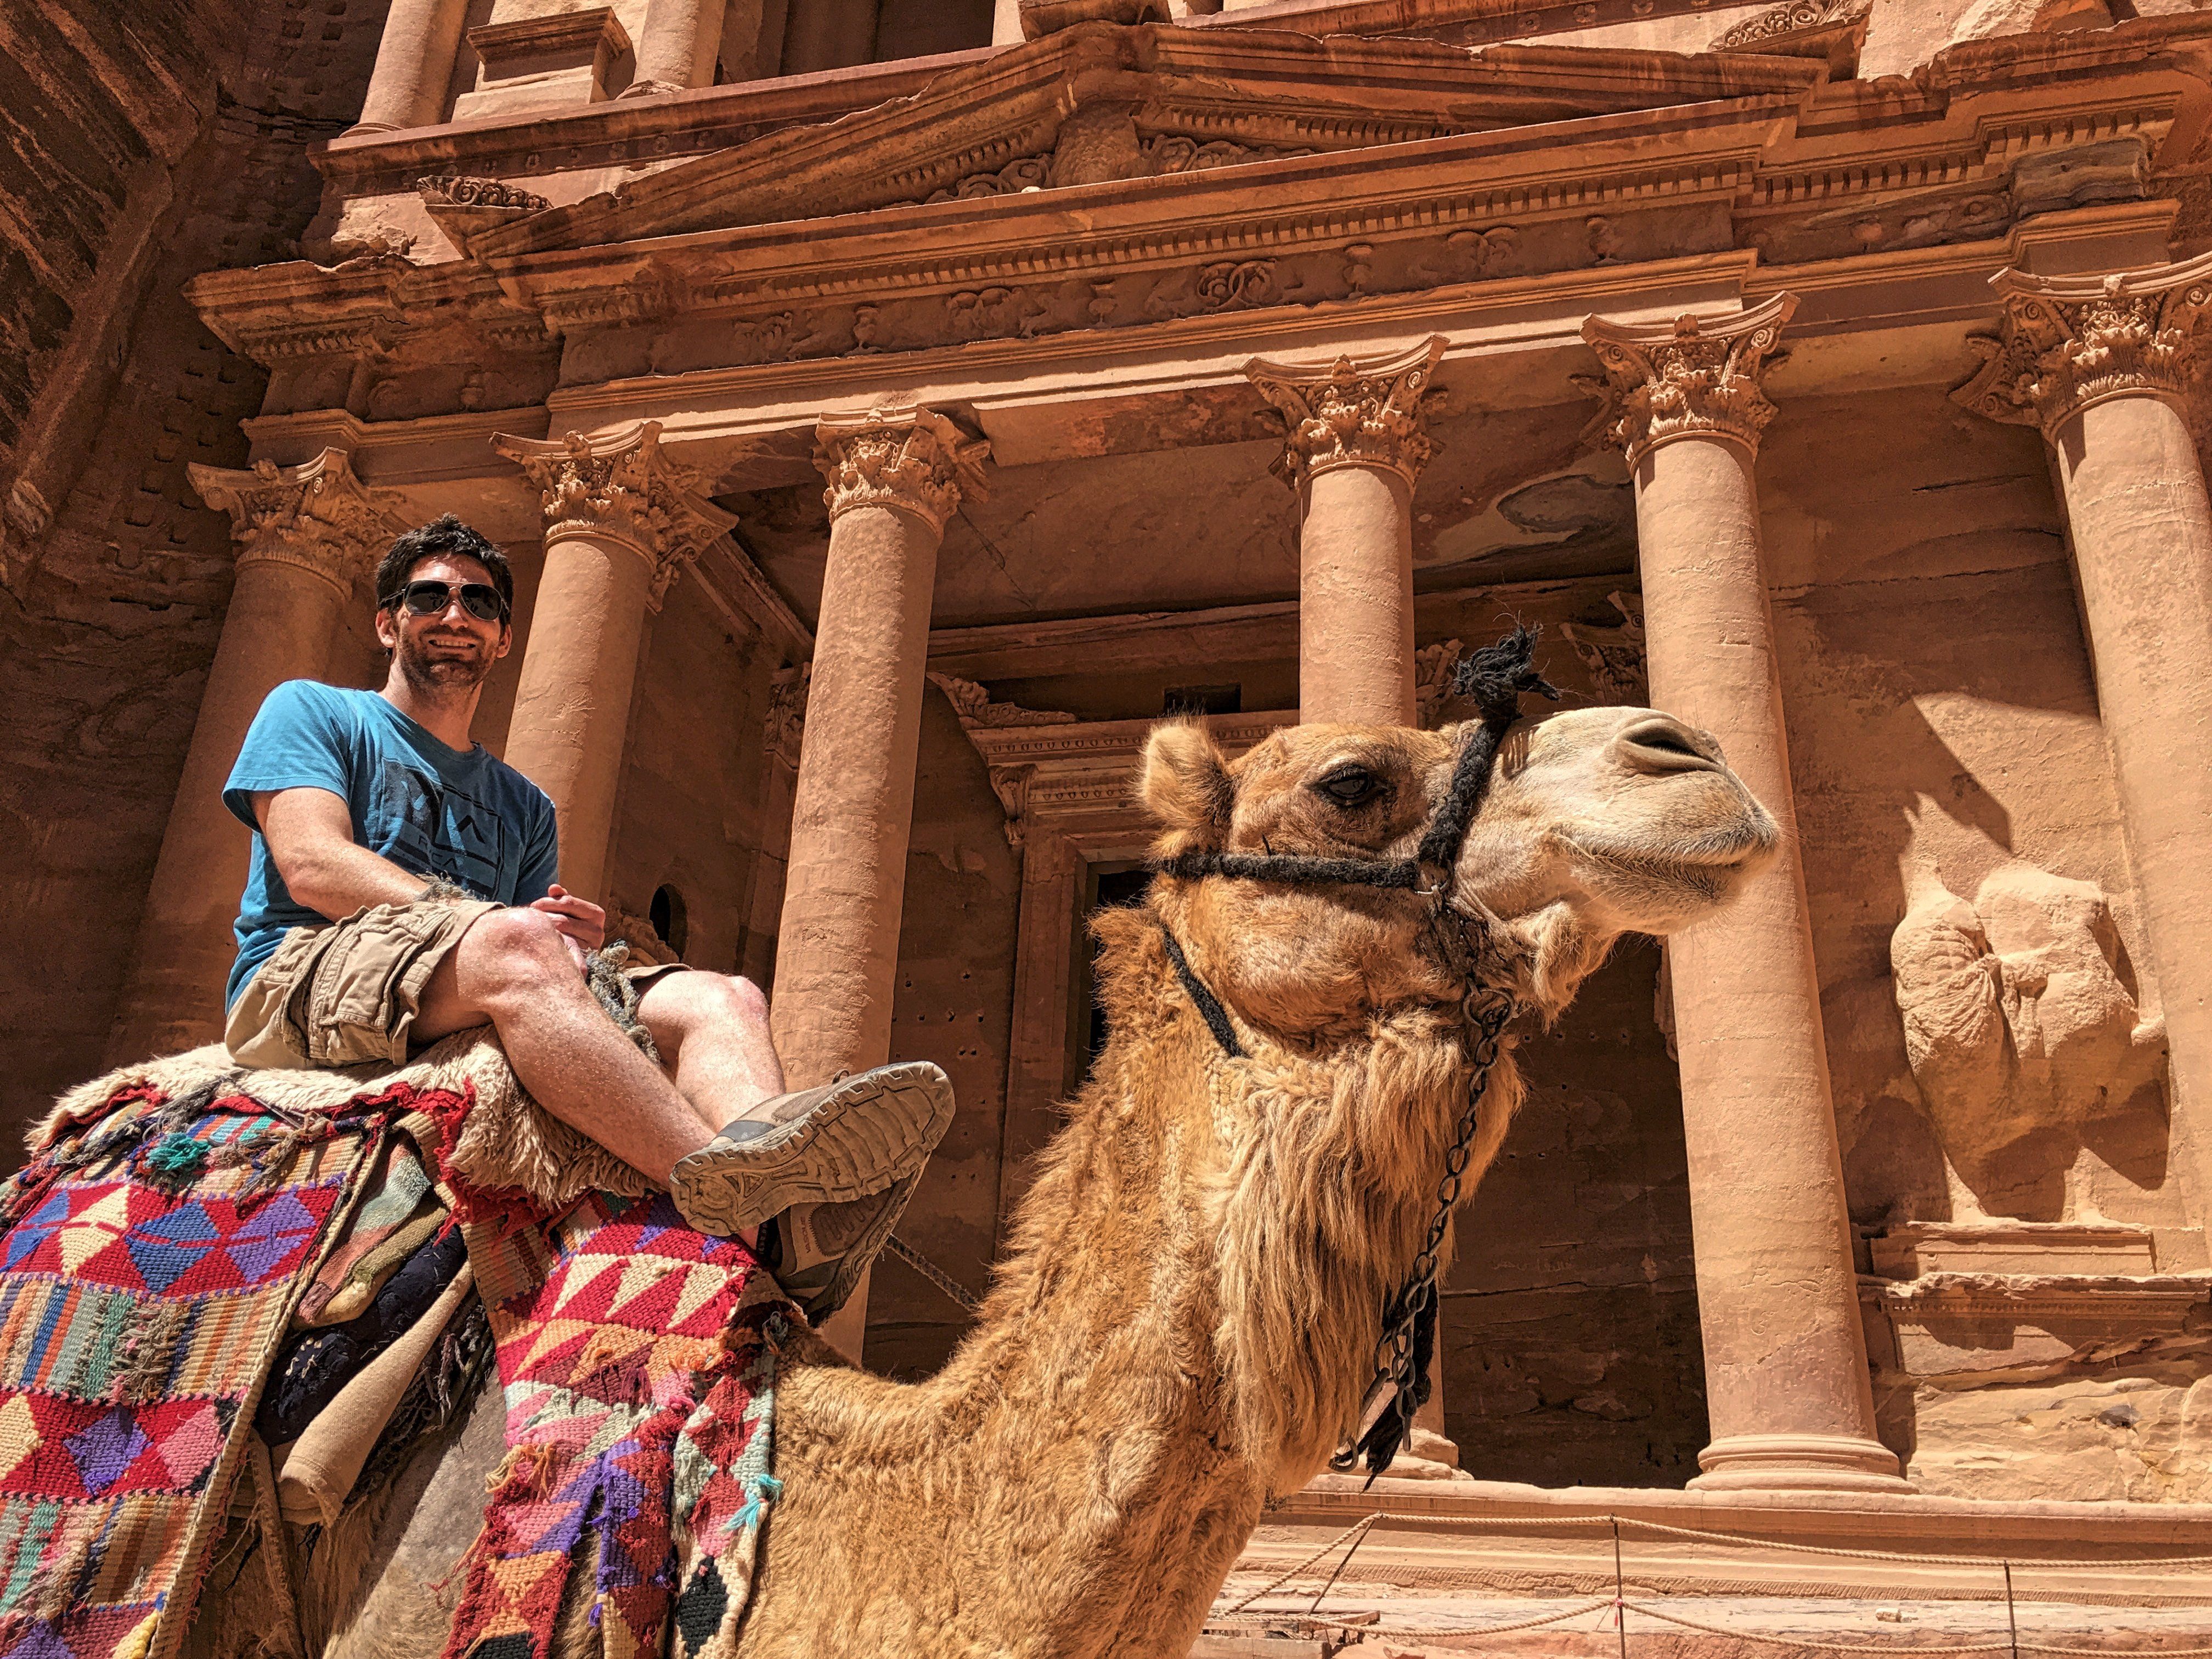 Me and my camel at Petra, Jordan. -Visit http://myvacation.com ...